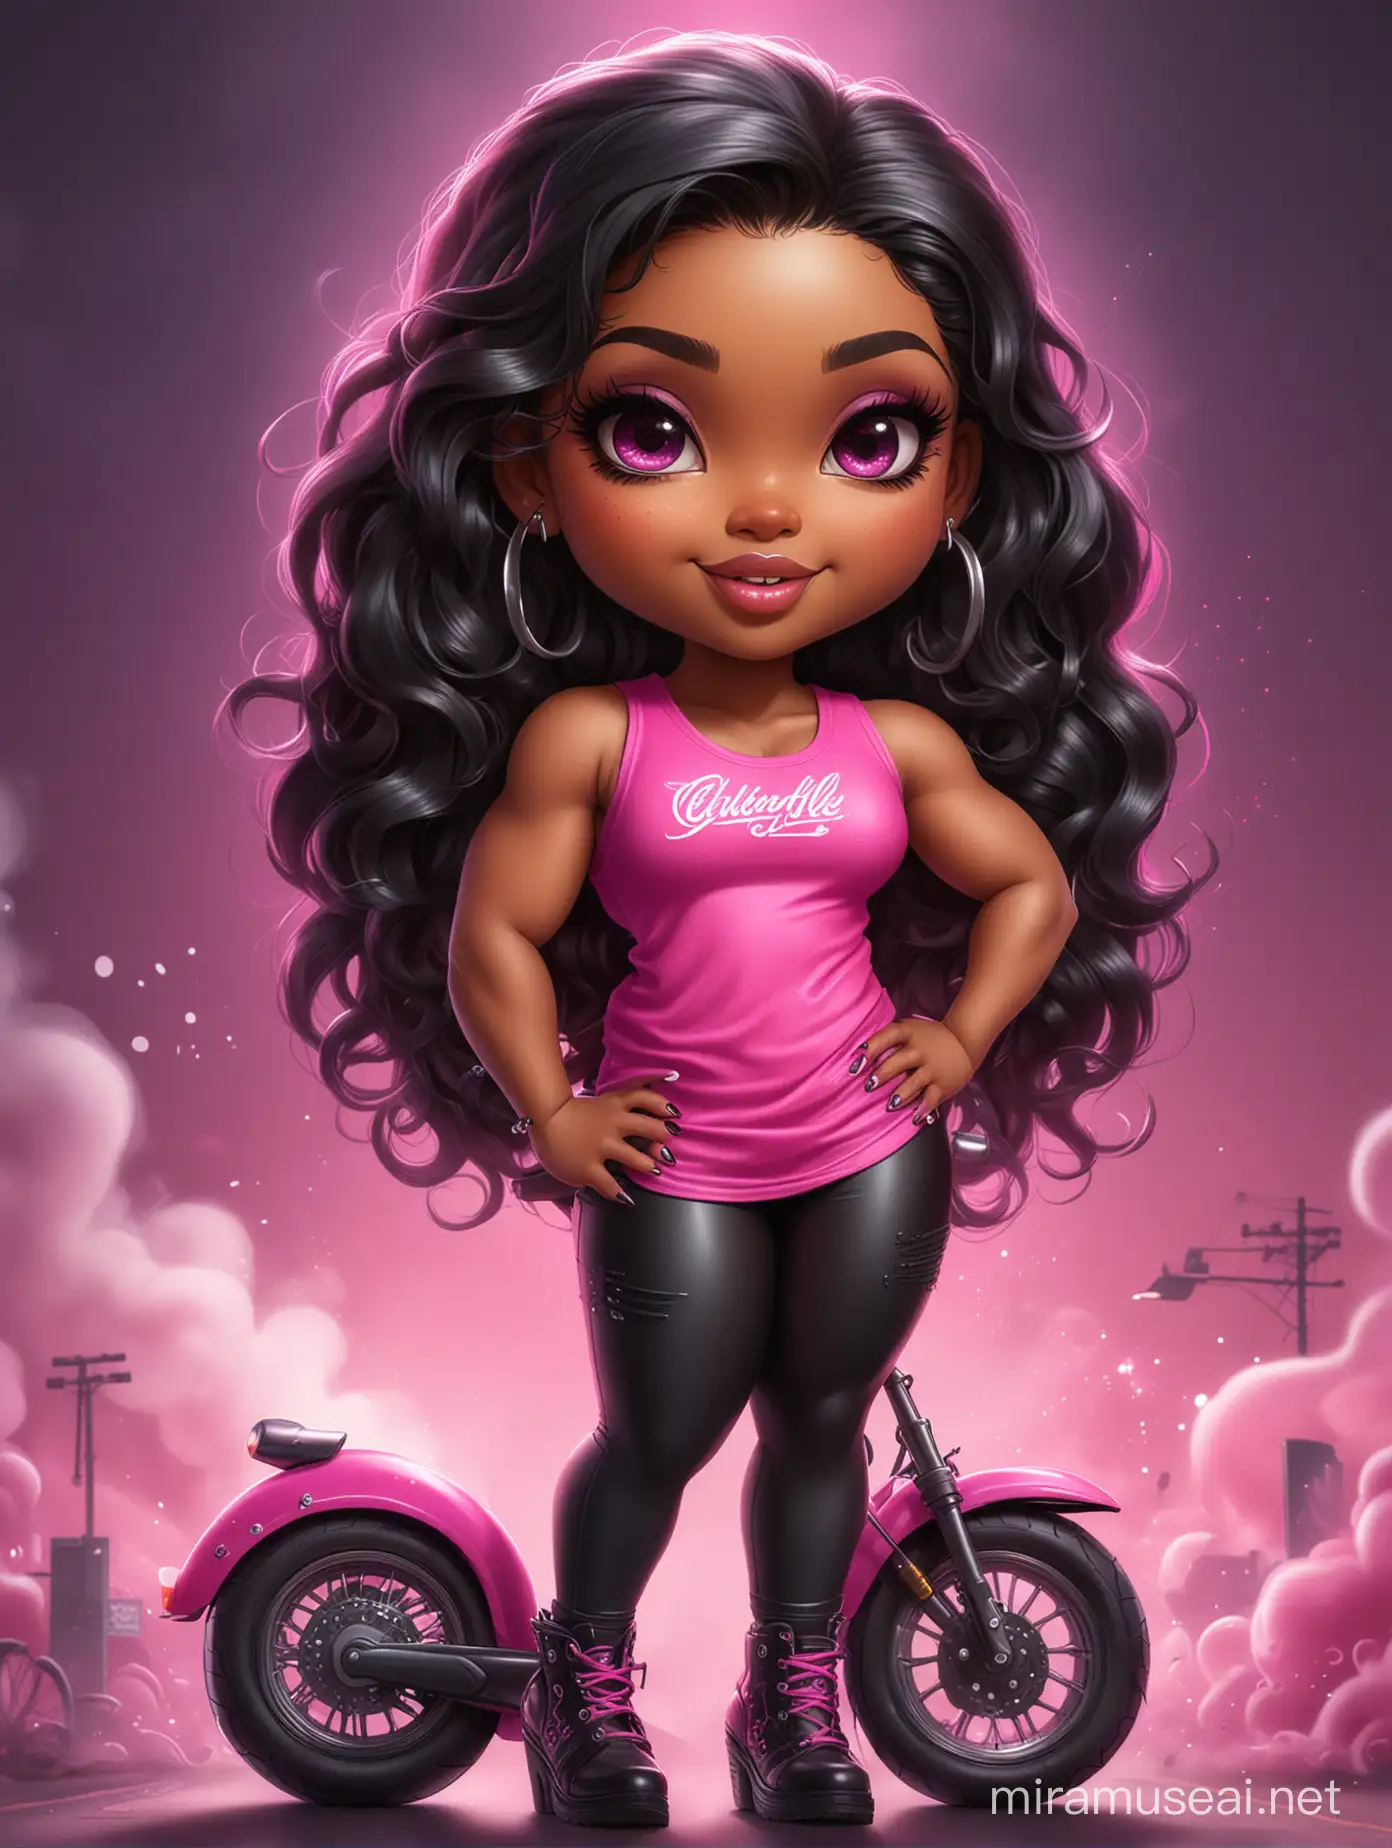 Chibi Curvy Black Female in Hot Pink Tank Top and Black Leggings at Bike Show